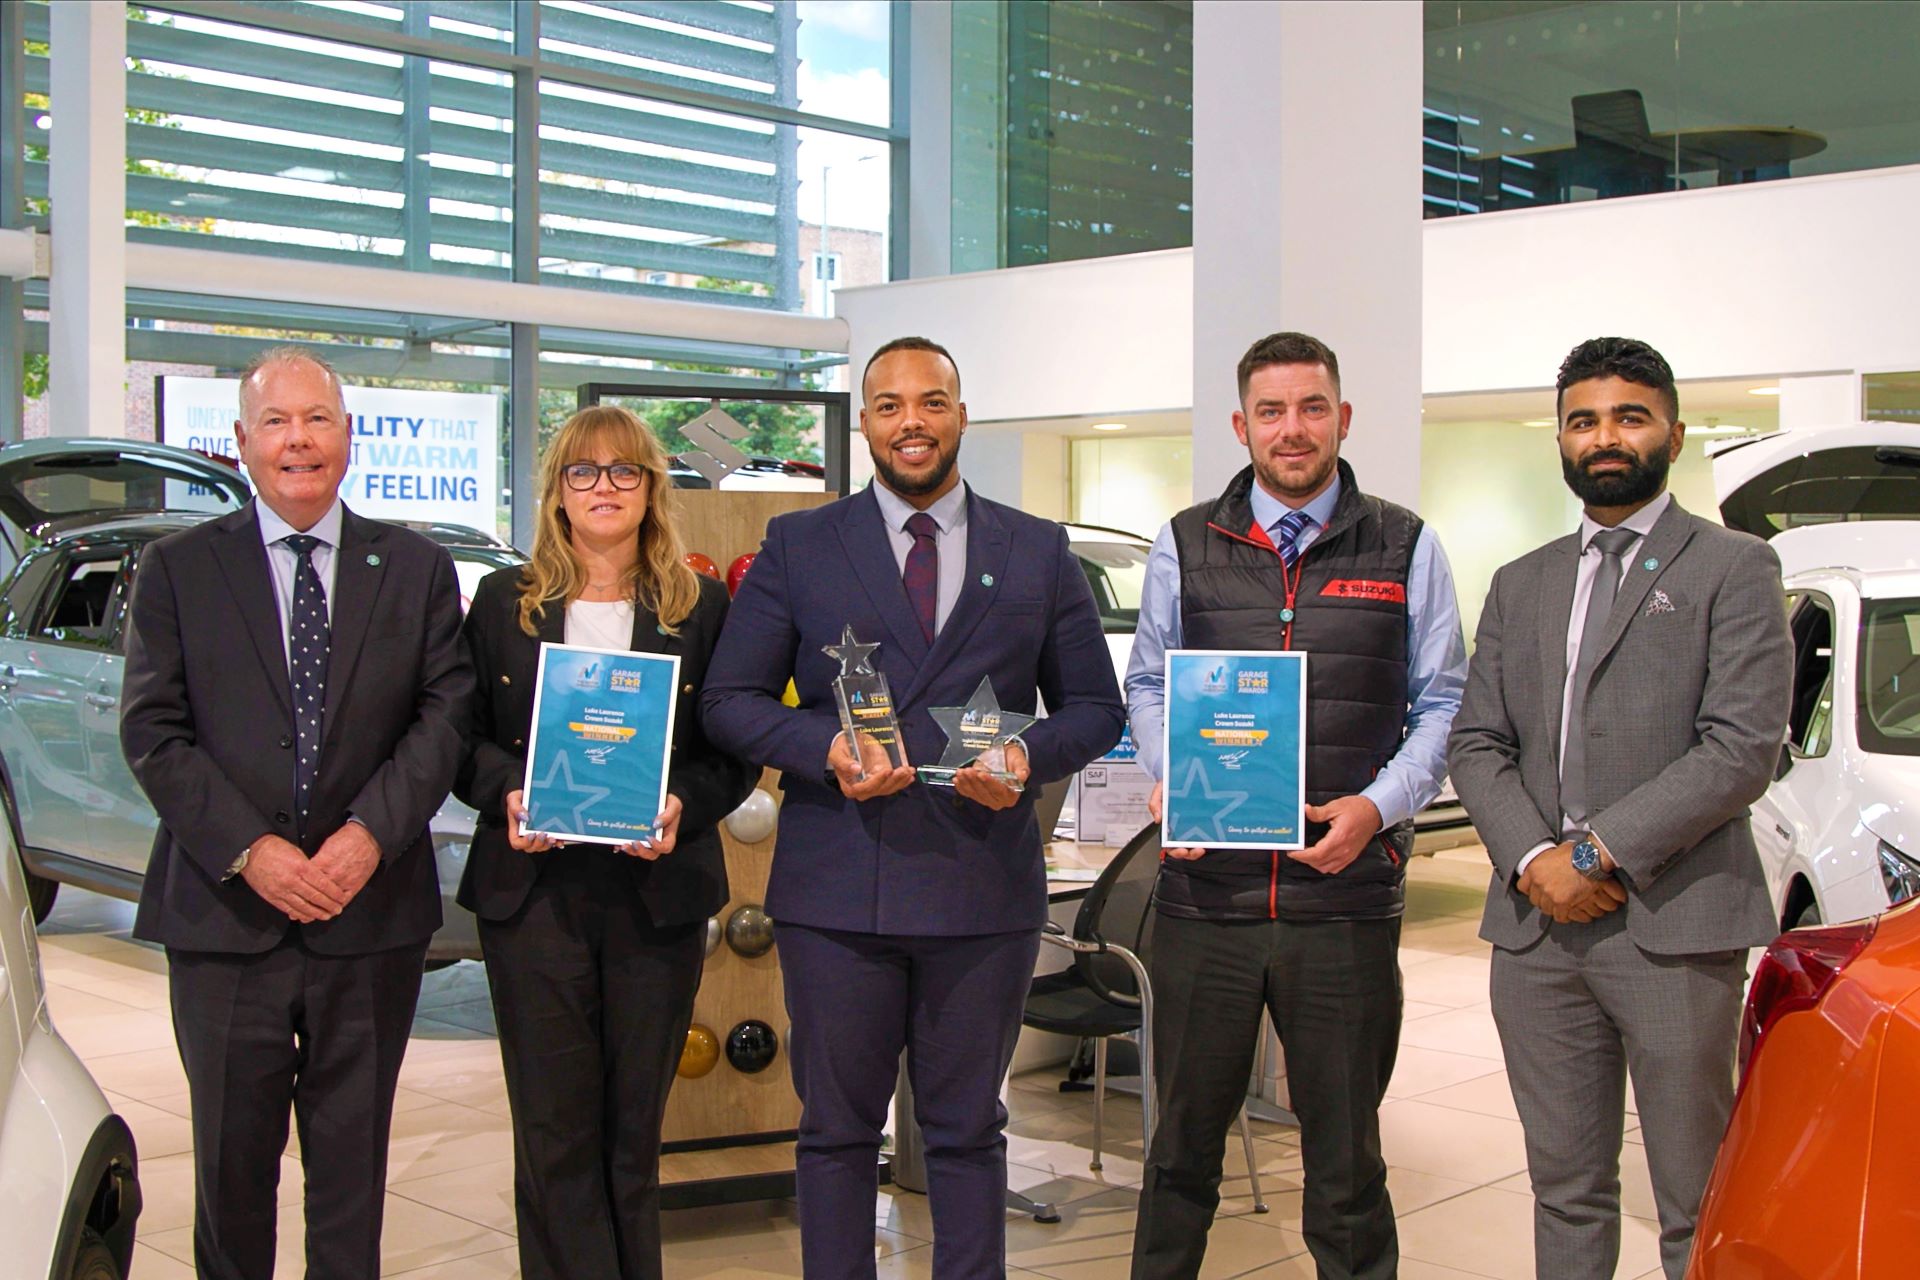 Crown Suzuki Sales Executive becomes first individual to win The Motor Ombudsman’s National Garage Star Award